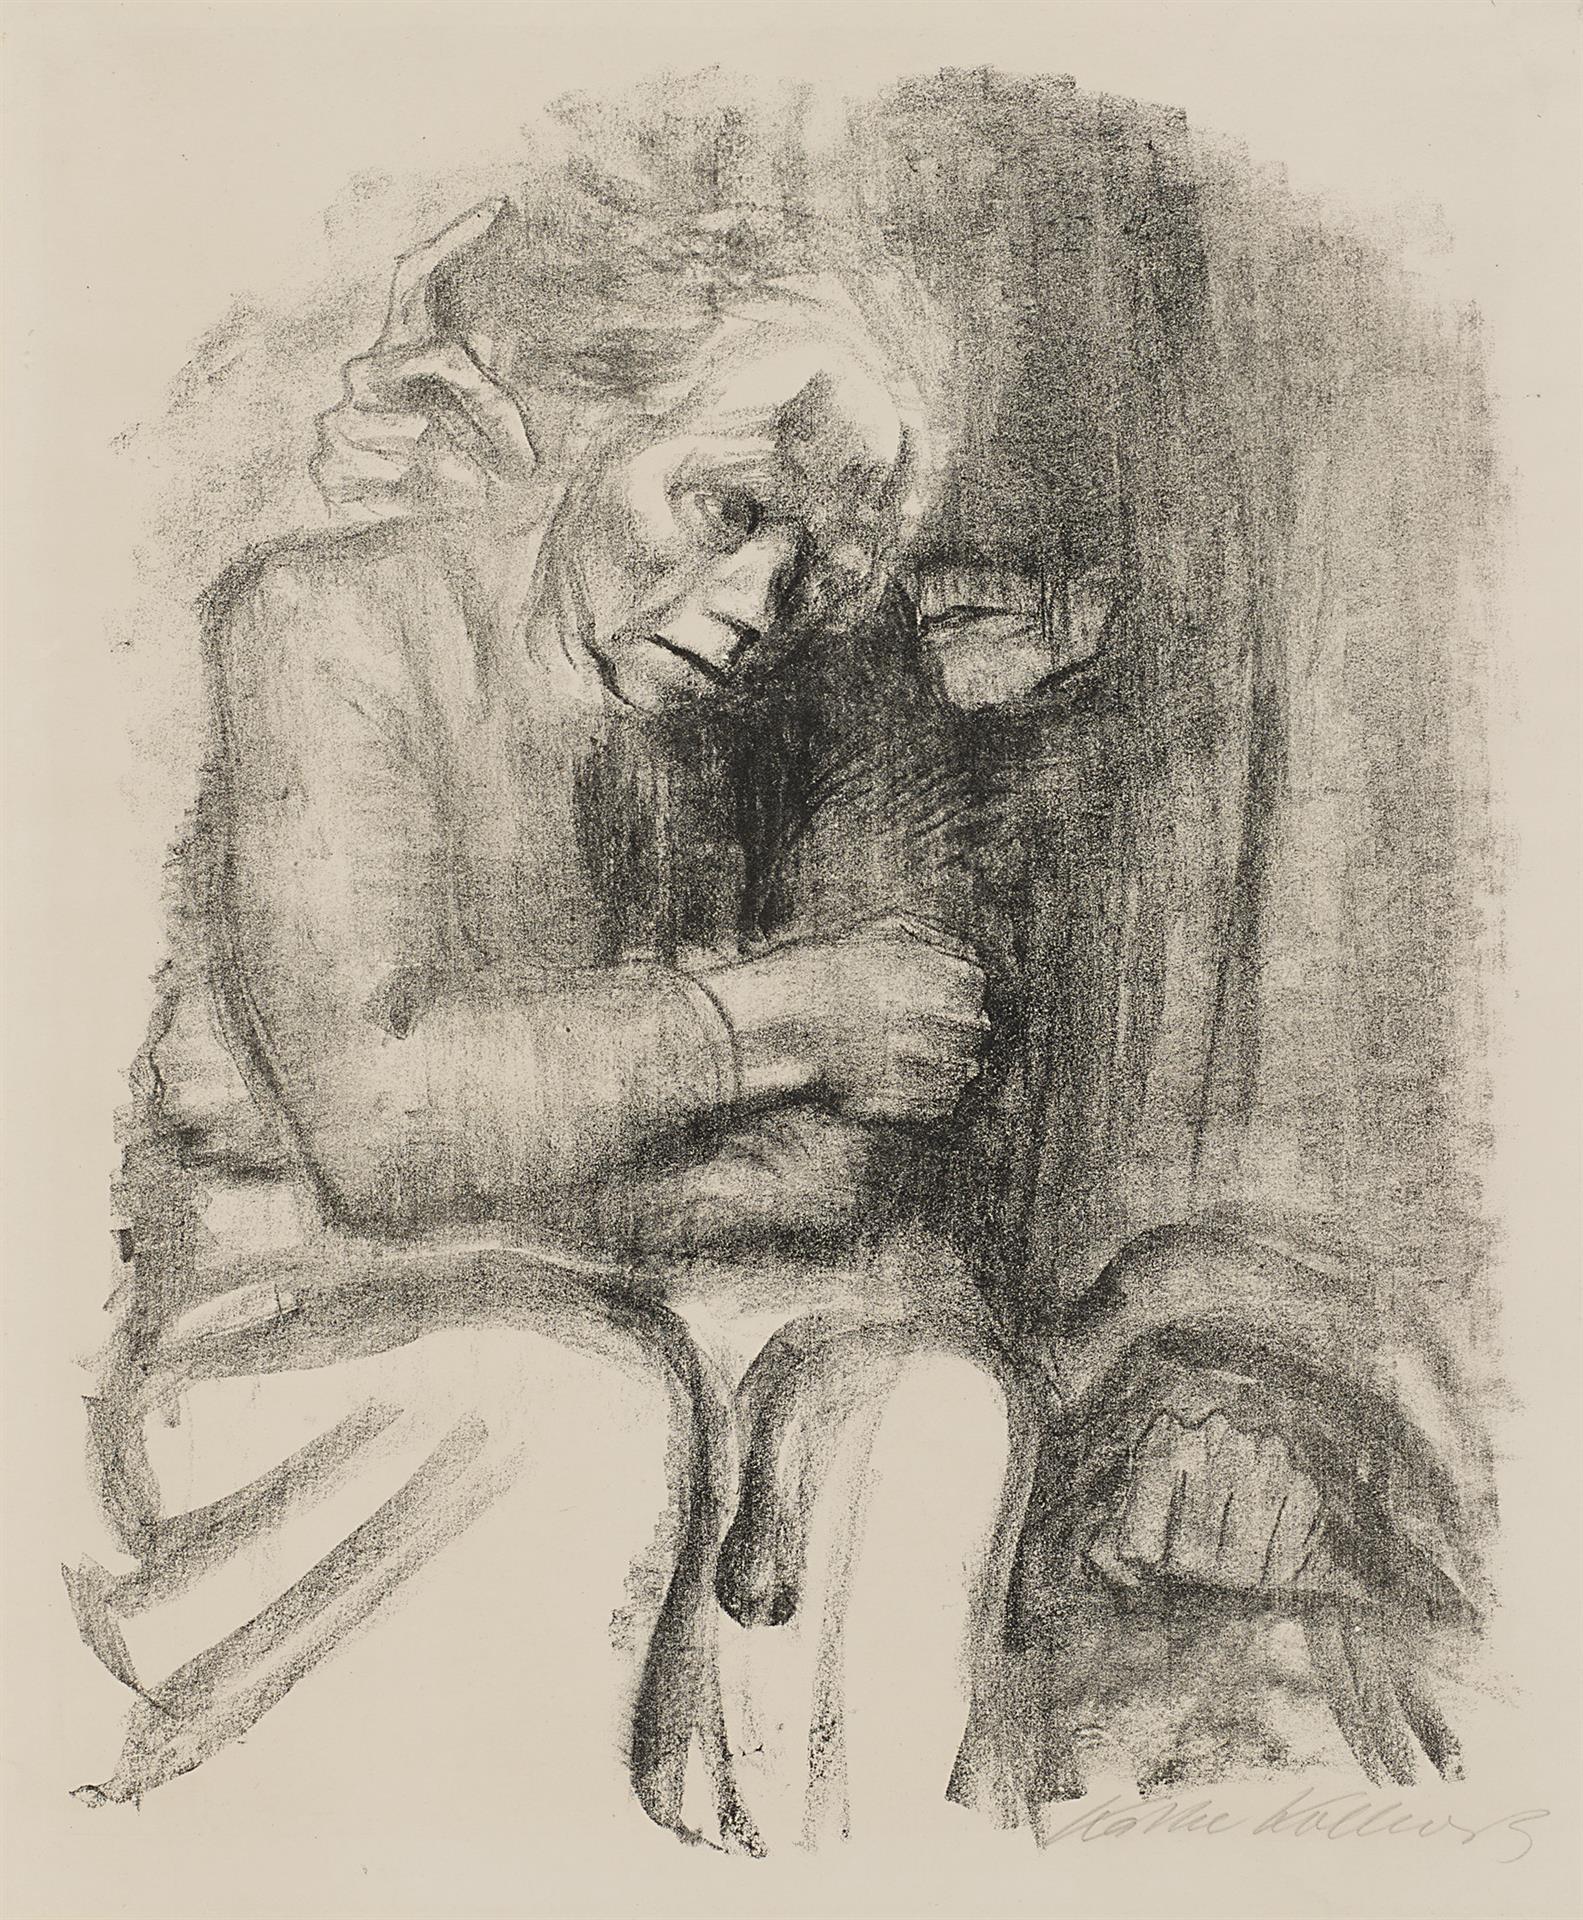 Käthe Kollwitz, Departure and Death, 1923, crayon lithograph (transfer), Kn 200, Cologne Kollwitz Collection © Käthe Kollwitz Museum Köln